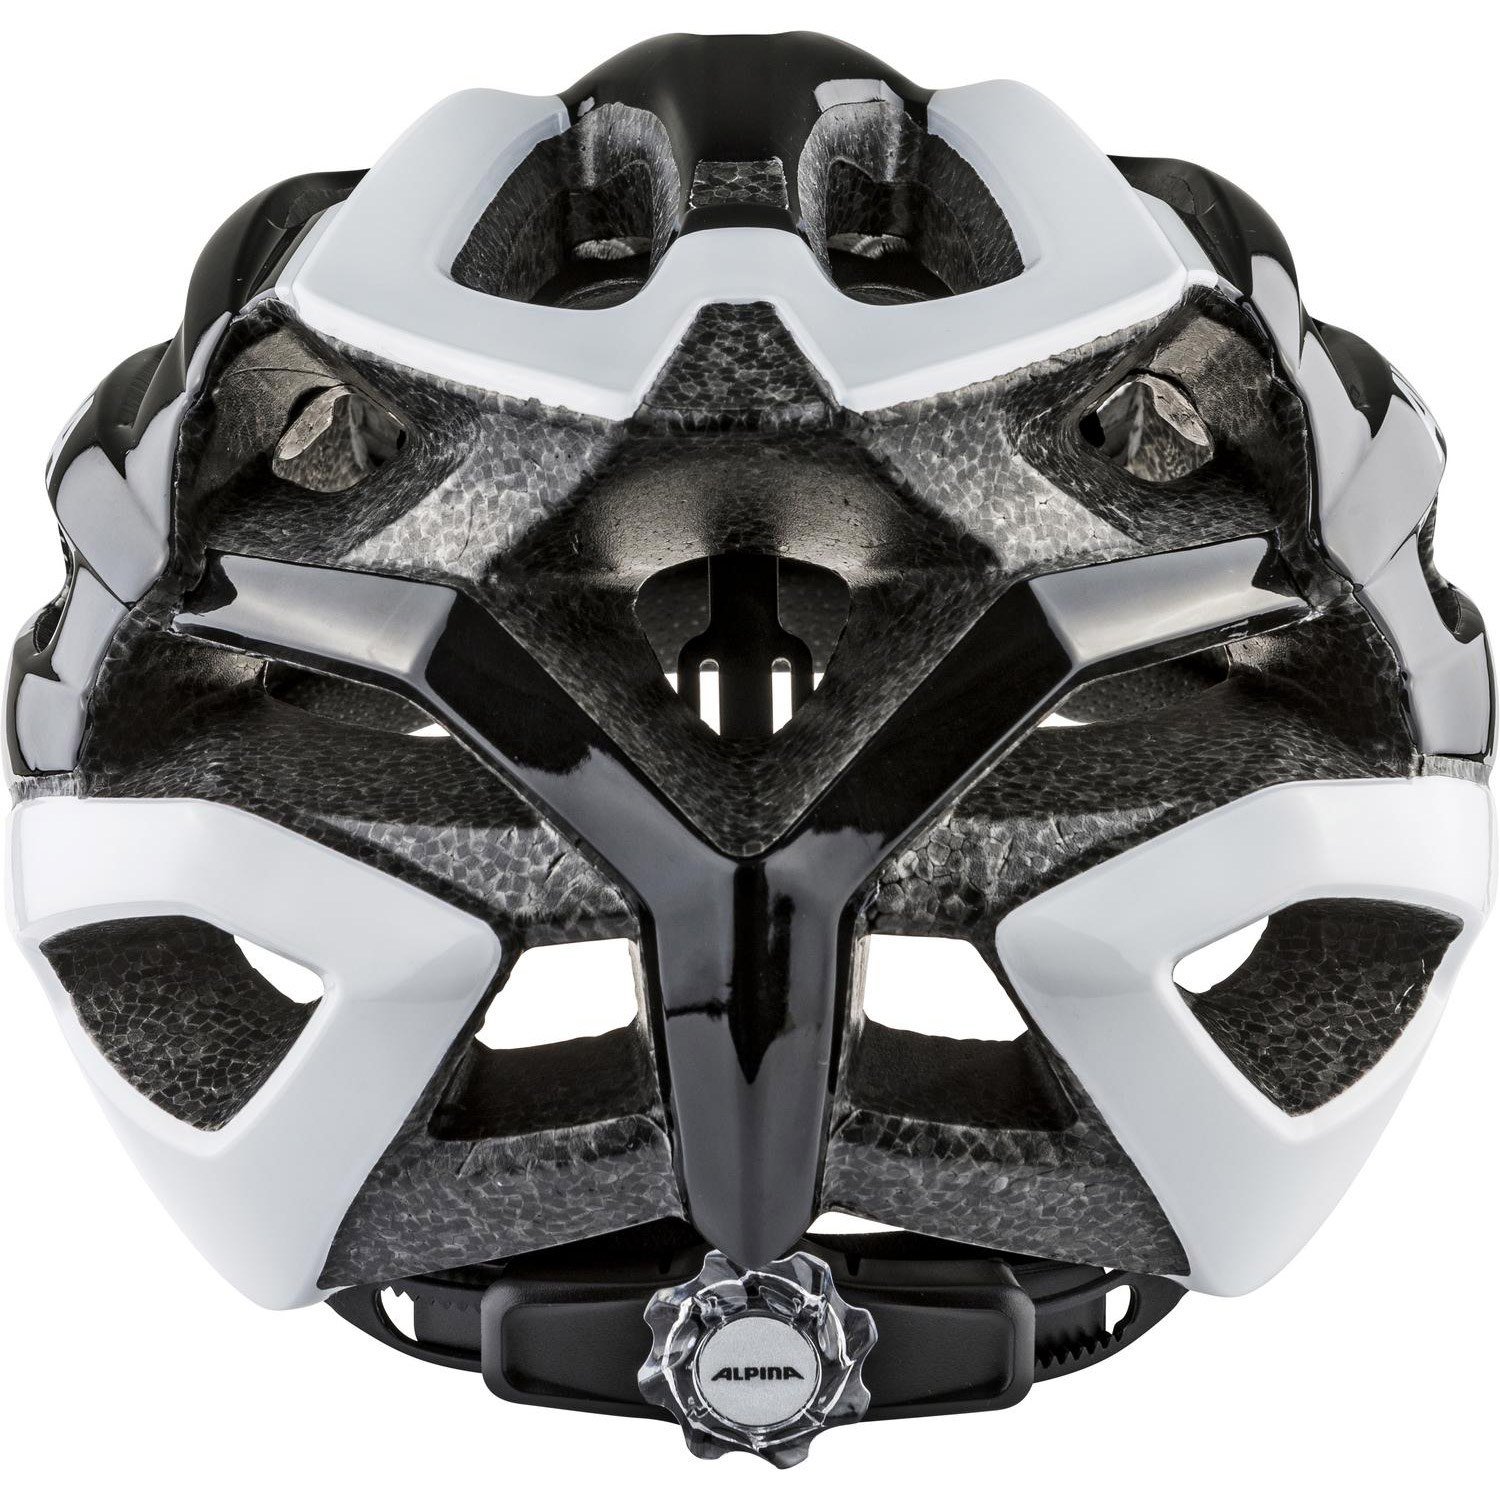 Alpina helm Fedaia black-white 53-58cm